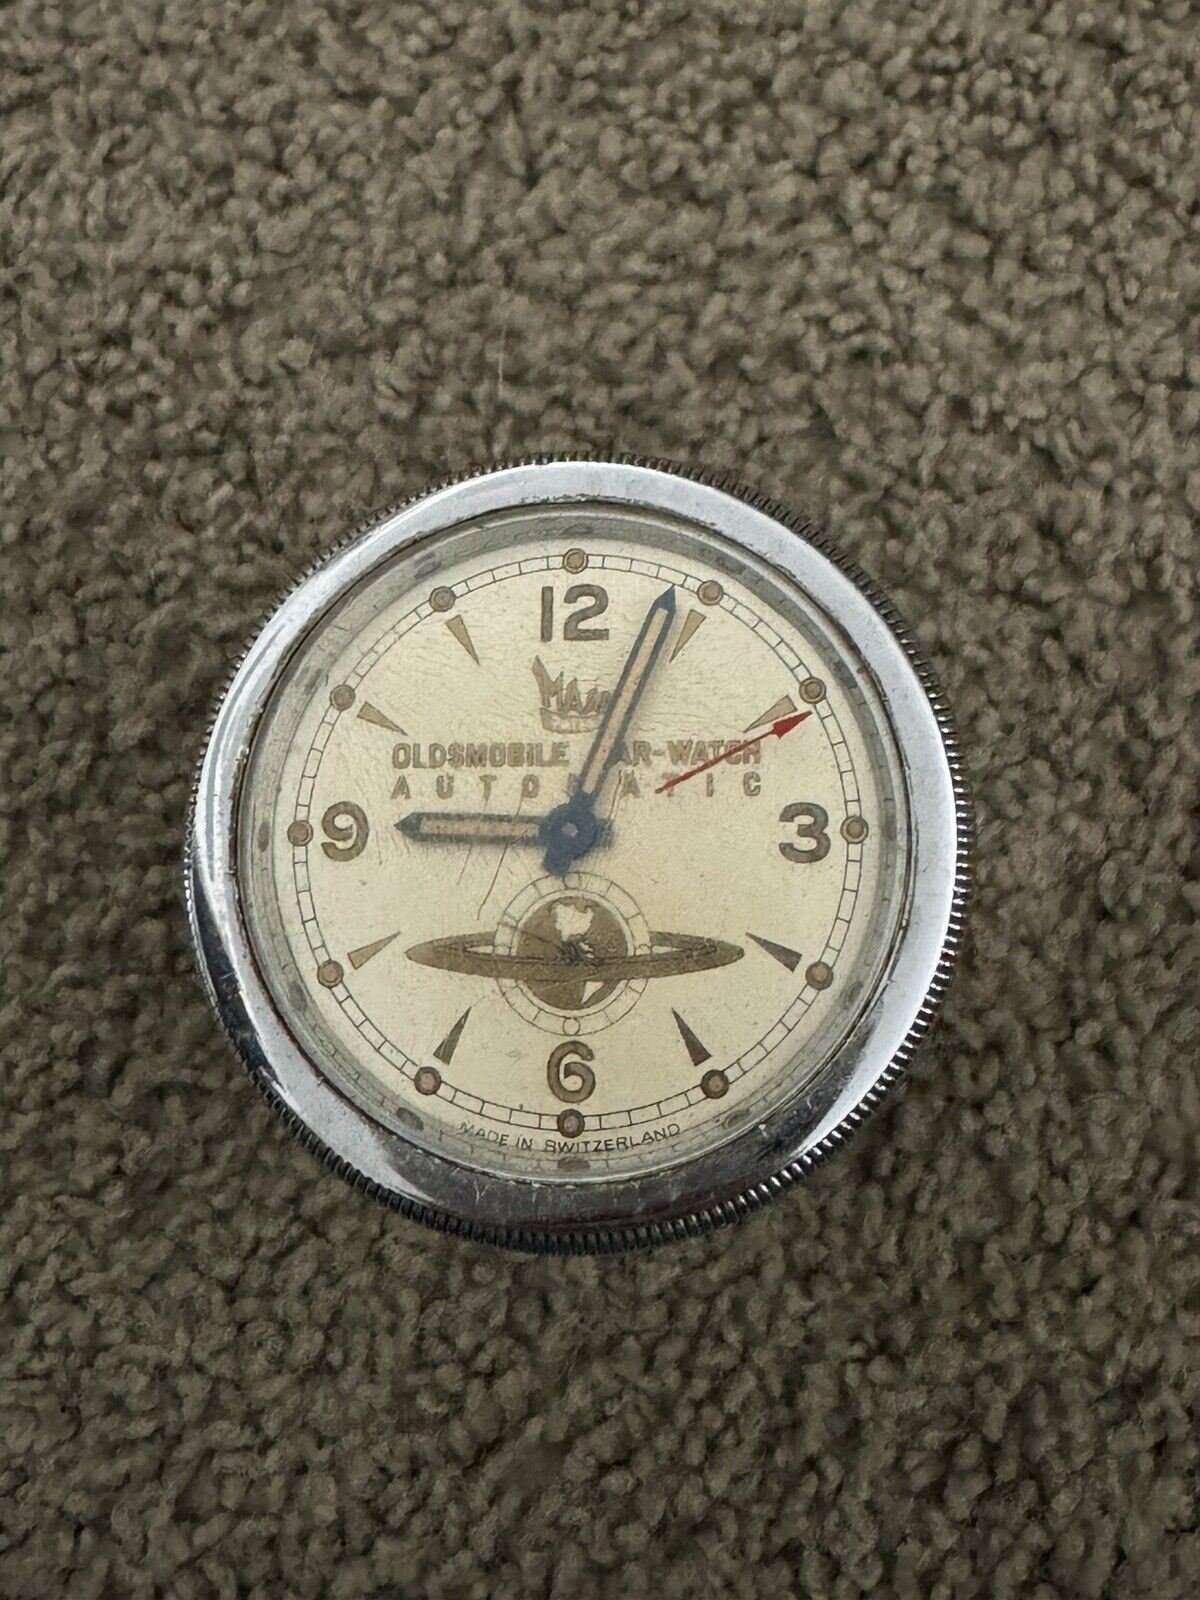 Vintage Oldsmobile Automatic Car-Watch Steering Wheel Clock Aged Lens